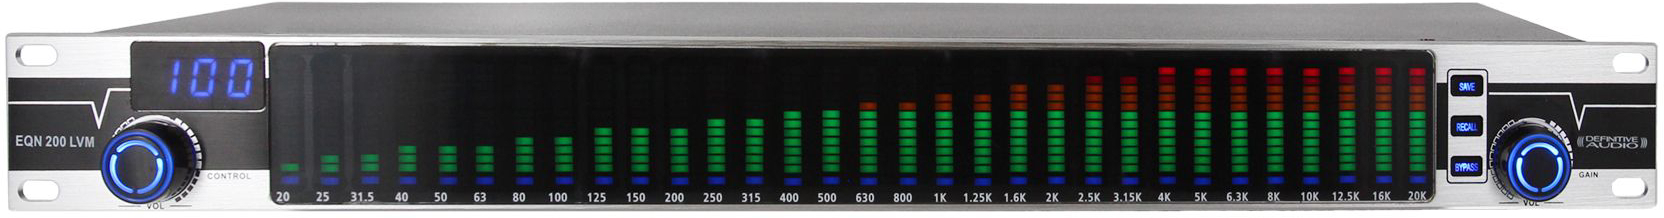 Definitive Audio Eqn 200 Lvm - Equalizador / channel strip - Main picture